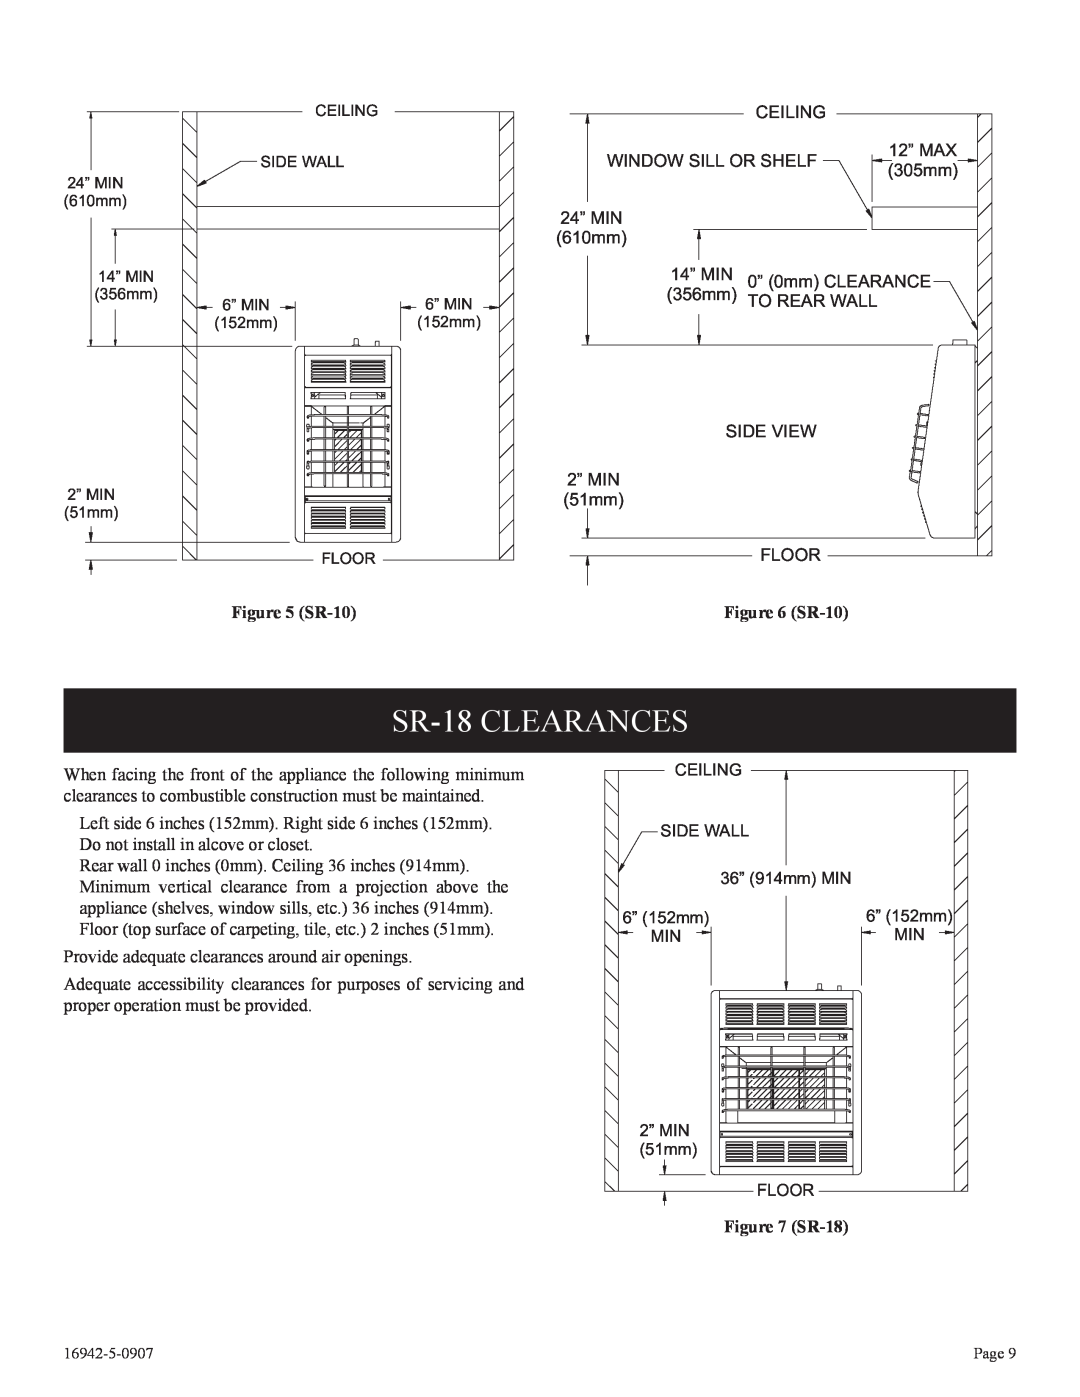 Empire Comfort Systems SR-30 installation instructions SR-18CLEARANCES, Floor, SR-10 